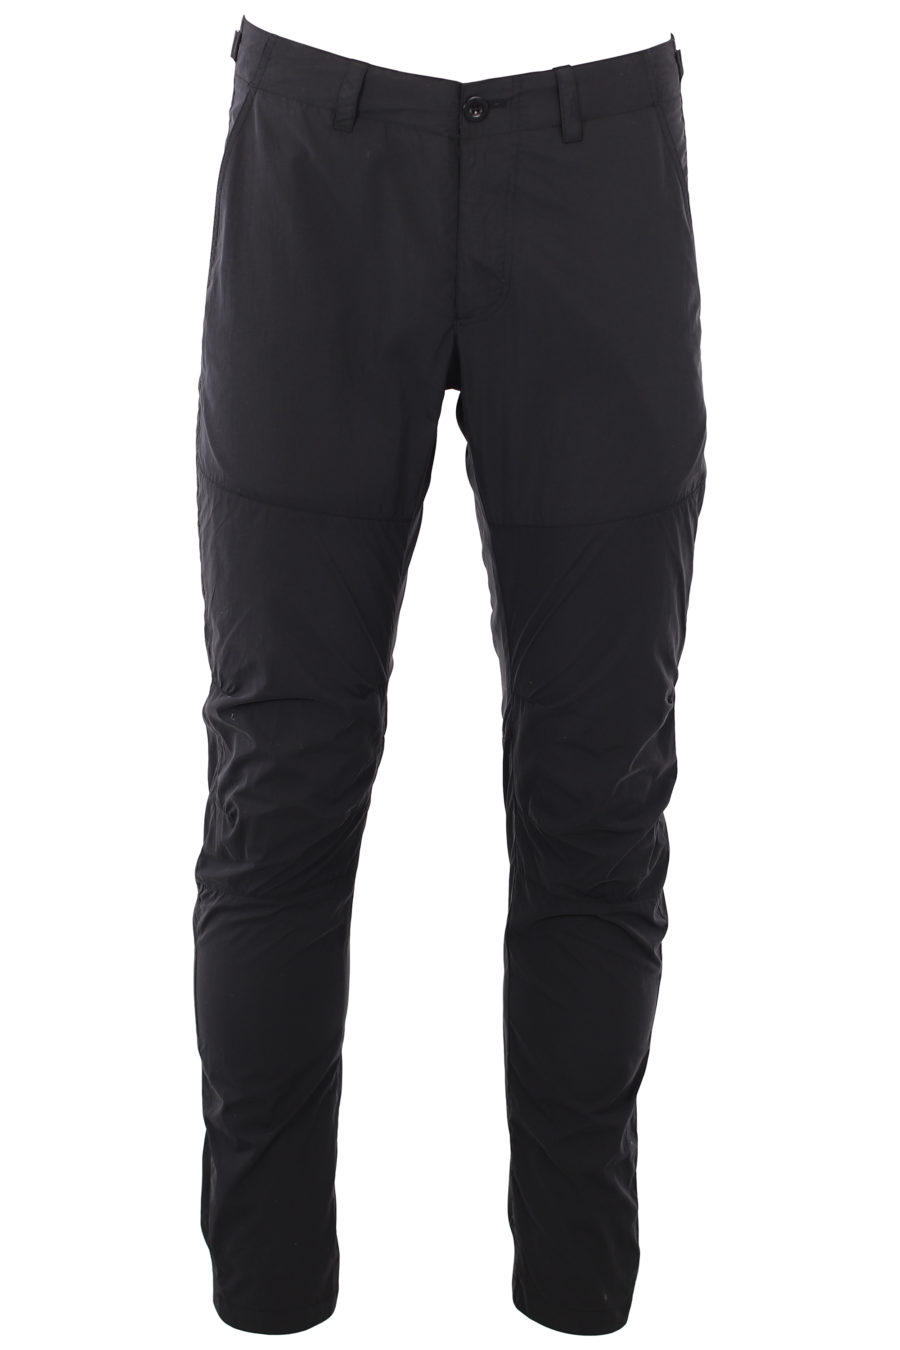 Pantalón largo "Tactical" color negro - IMG 1432